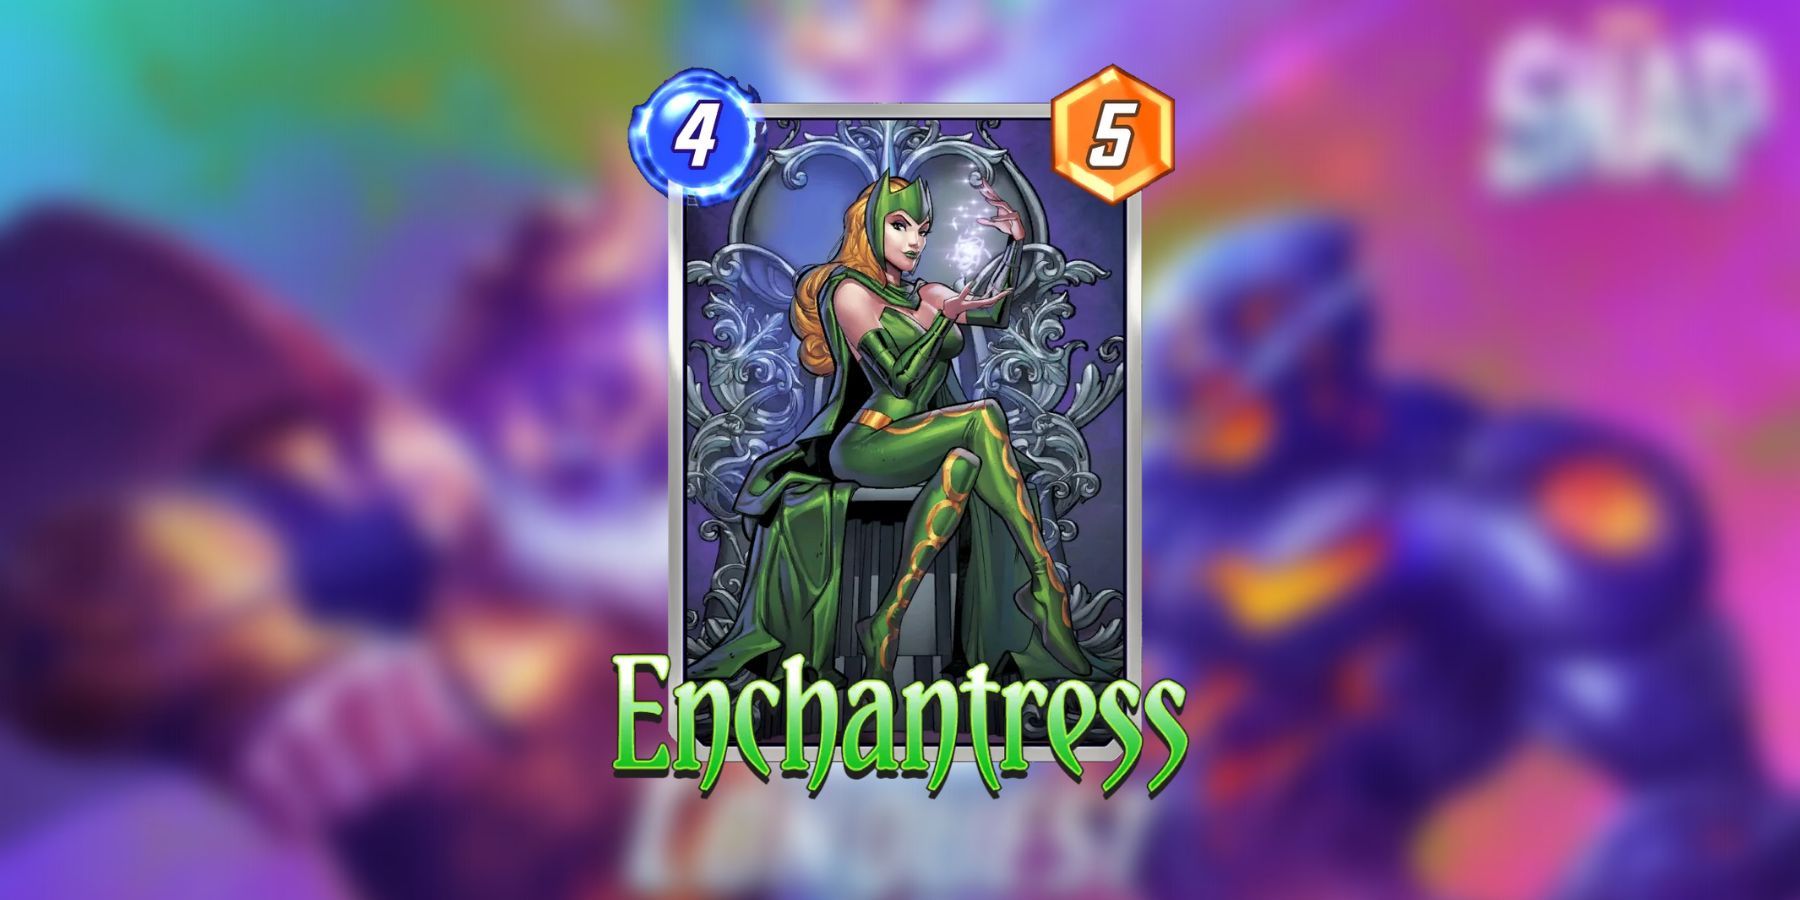 image showing enchantress in marvel snap.